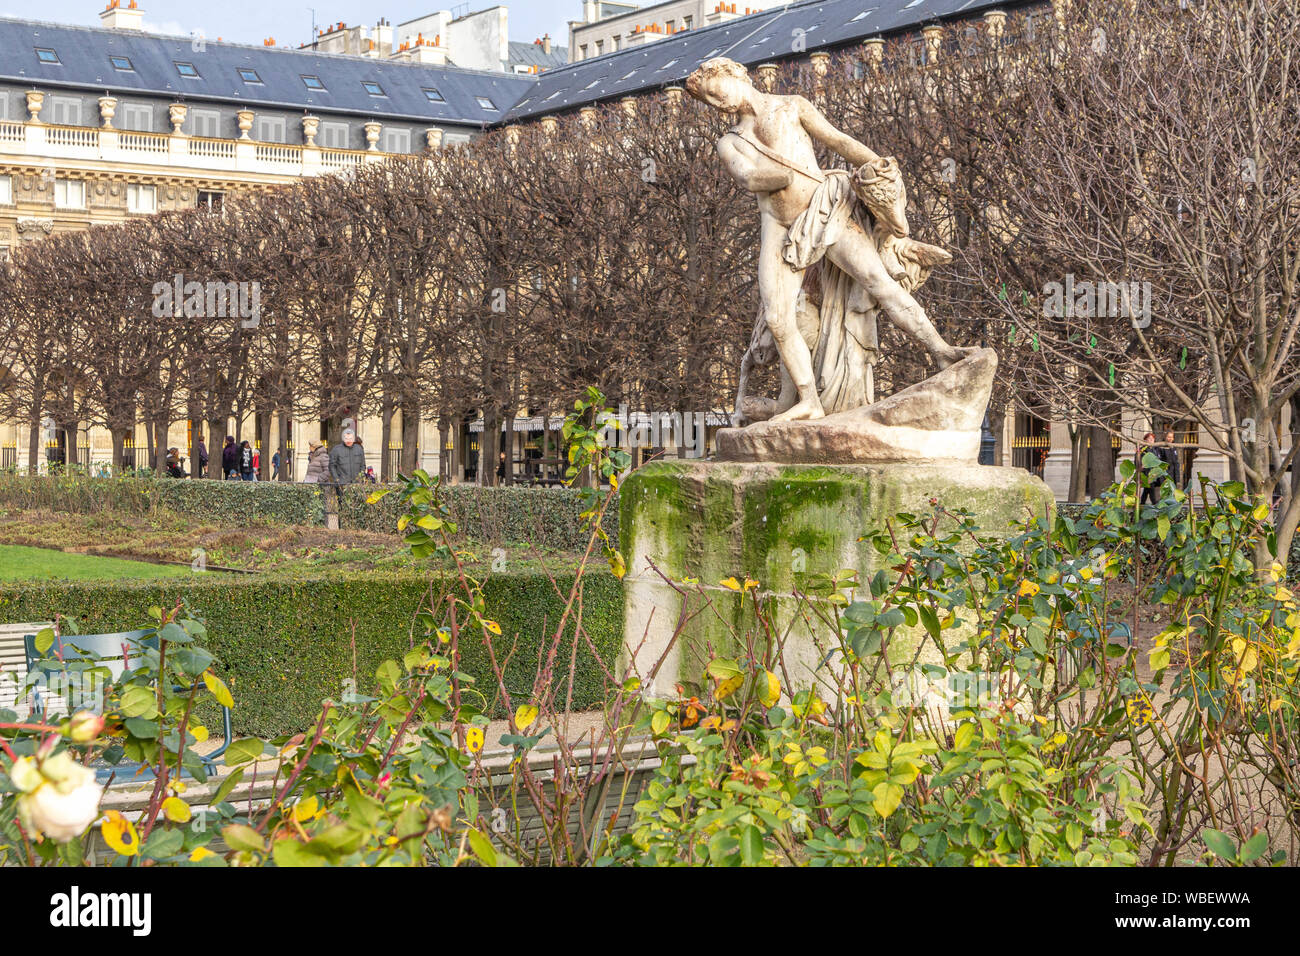 Paris, France - January 02, 2013: The gardens of the Royal Palace (Palais Royal) at Paris on a winter day Stock Photo